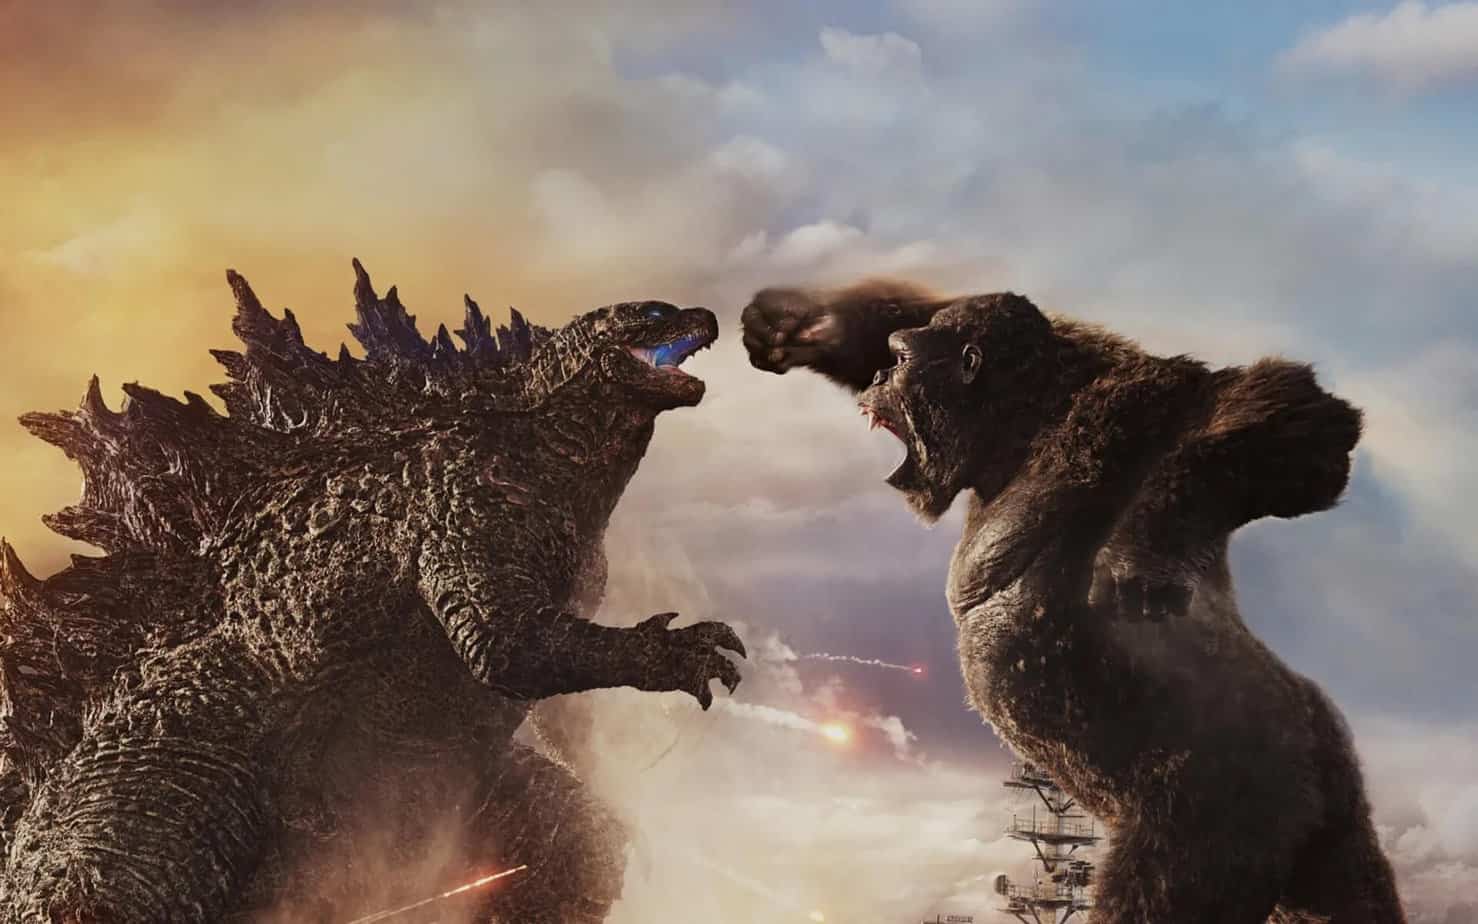 Godzilla Vs. Kong, Test Screening teased!